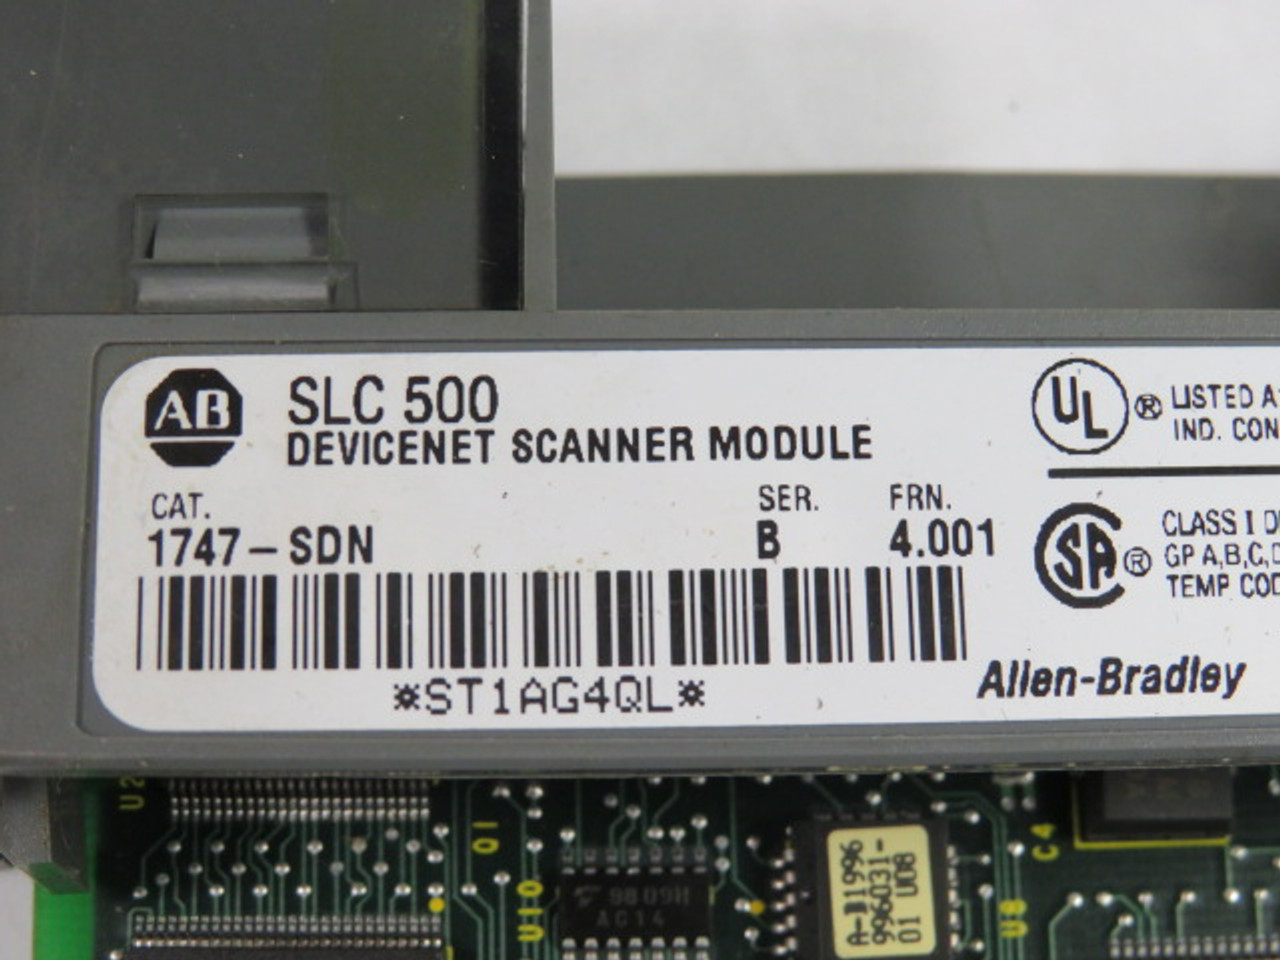 Allen-Bradley 1747-SDN Series B DeviceNet Scanner Module BROKEN PART USED